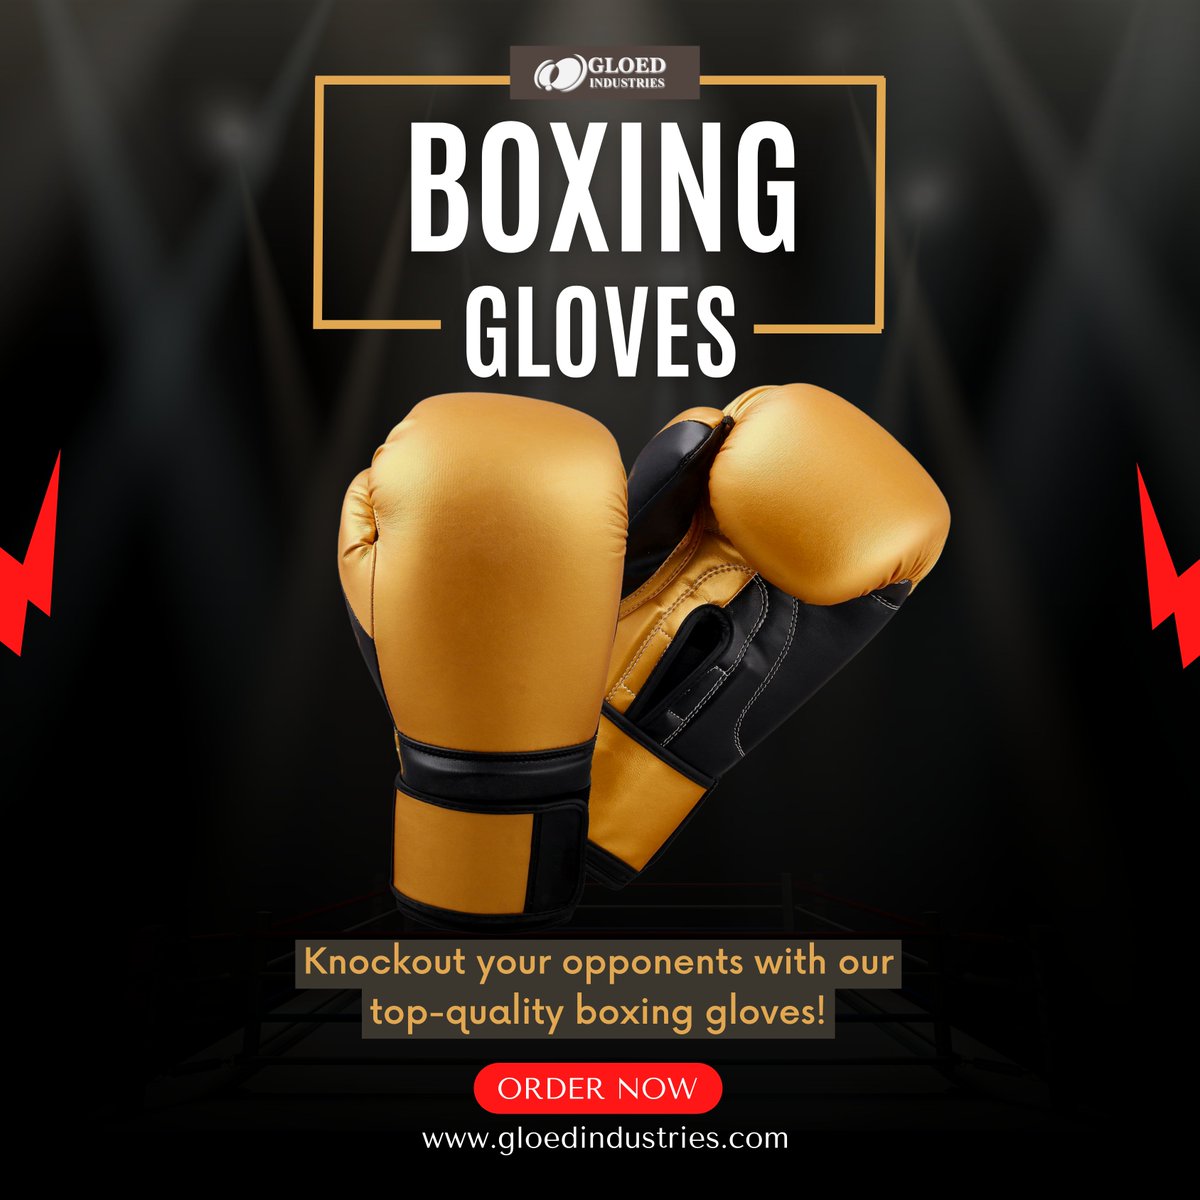 #BoxingGloves #ProBoxing #BoxingTraining #BoxingGear #BoxingLife #BoxingCommunity #BoxingChampion #FightLikeAPro #CodeHighlights